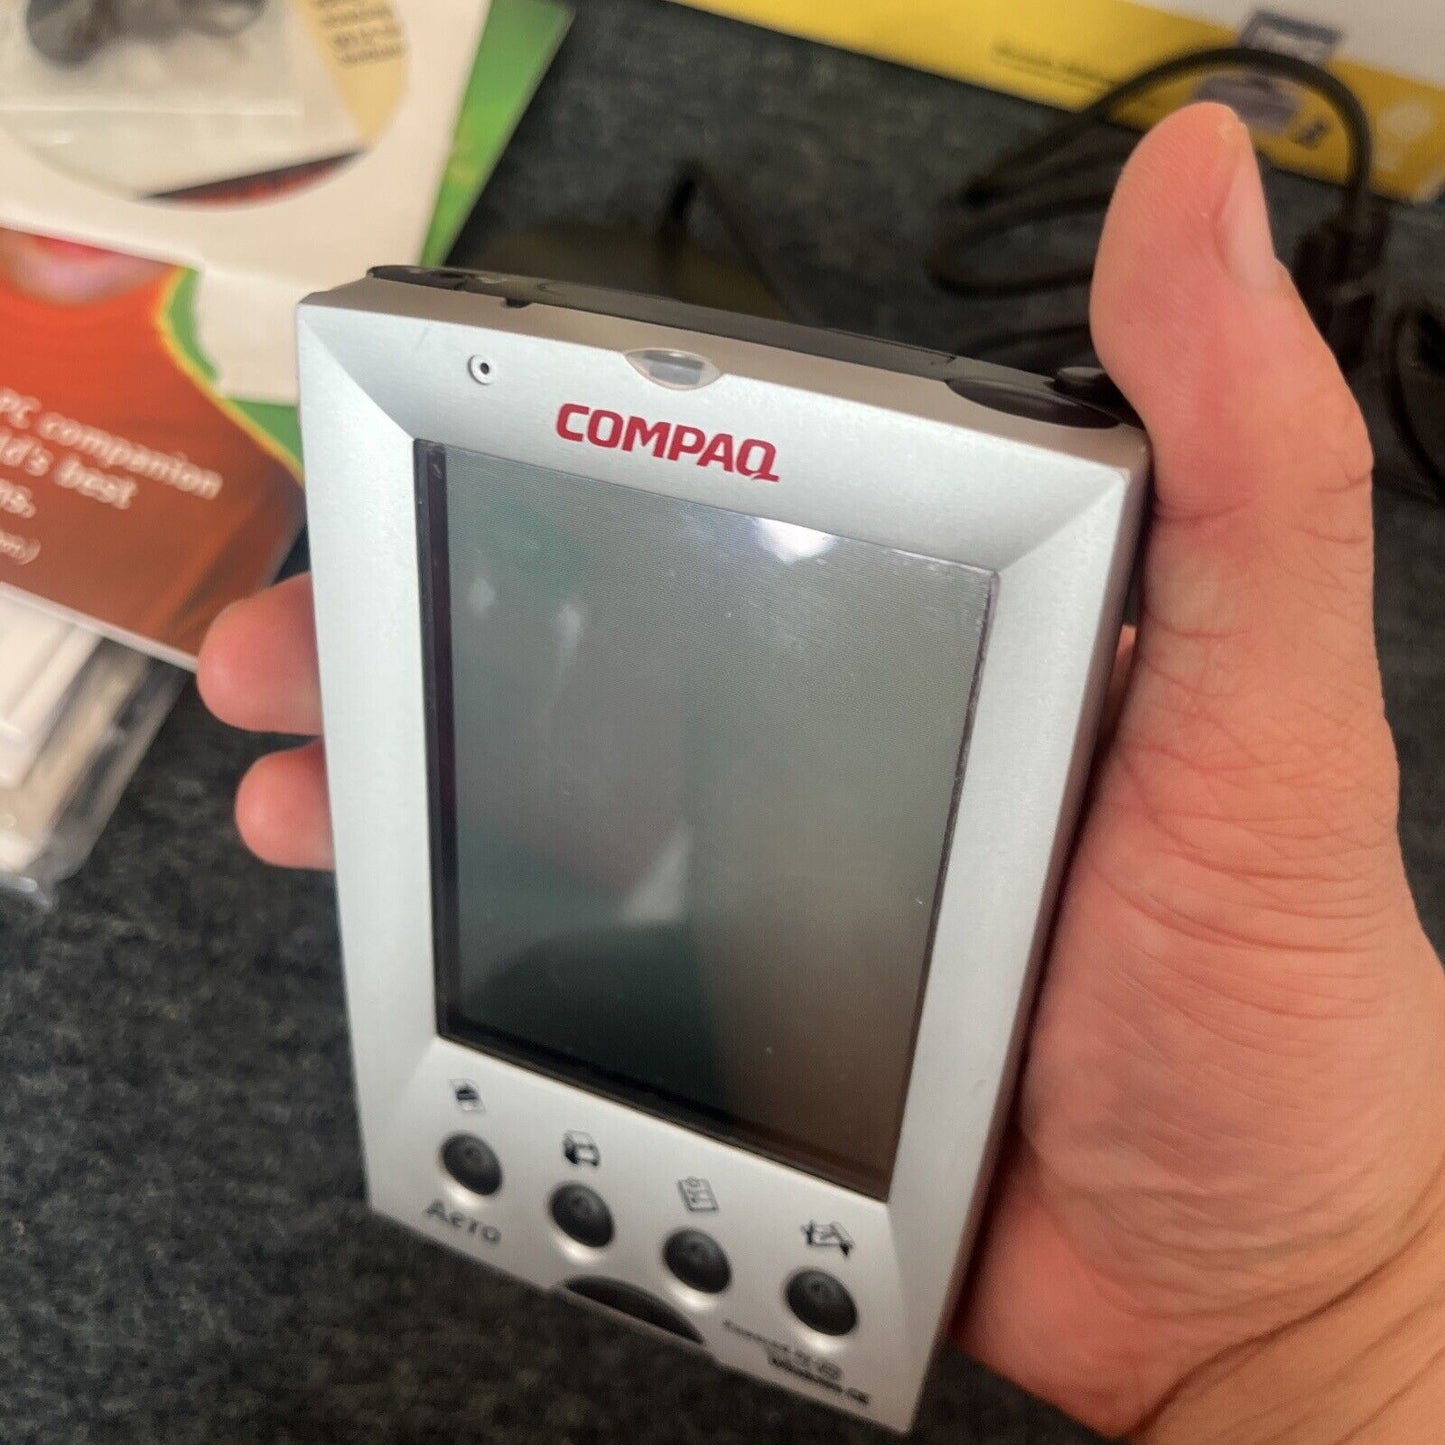 Compaq Aero 2100 Colour Palm Size PC Windows CE